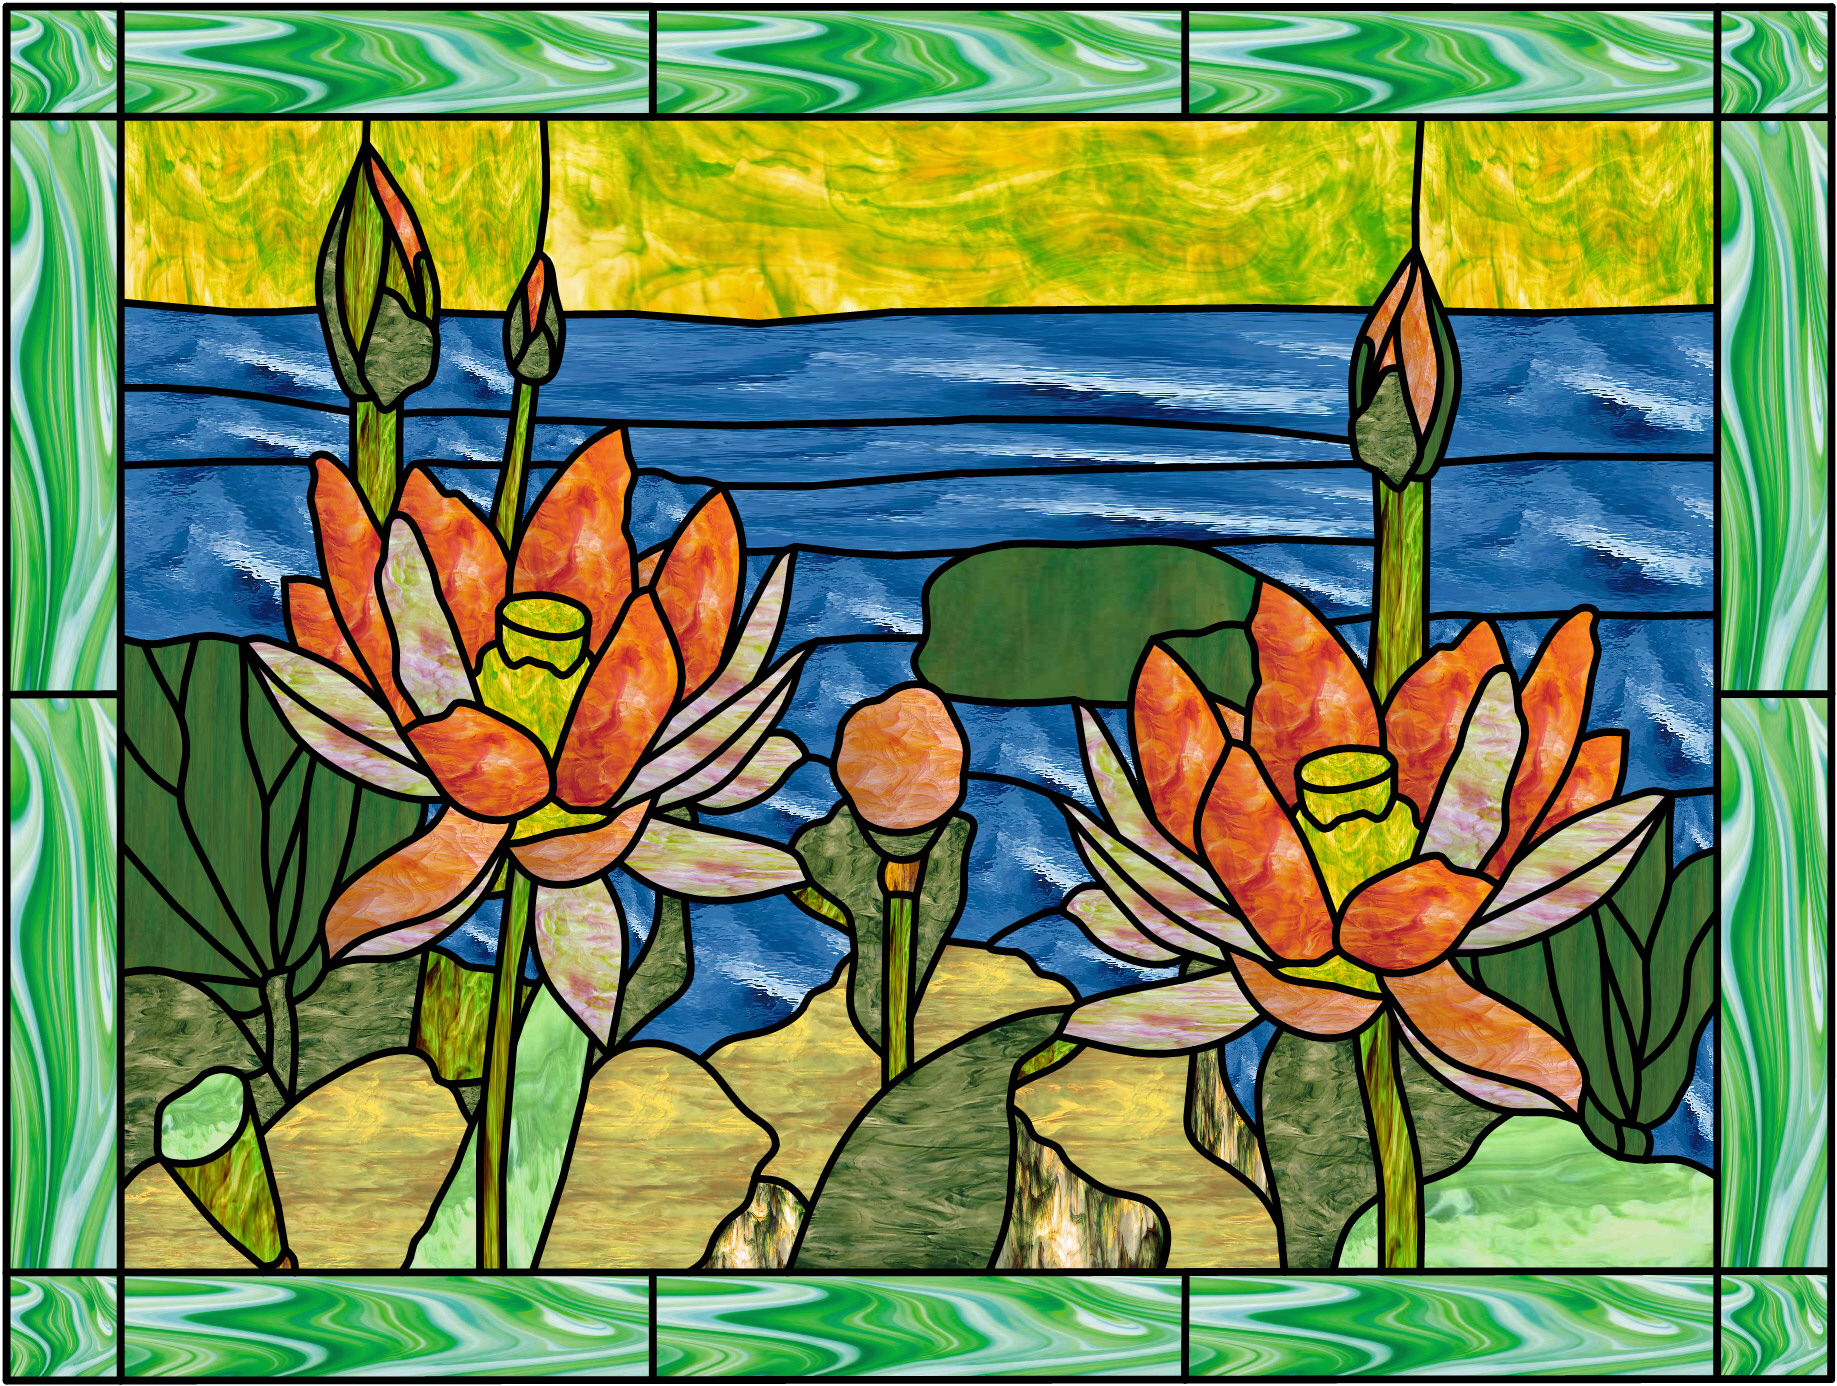 Lotus Flowers & Lake Stained Glass Window Panel - StainedGlassWindows.com